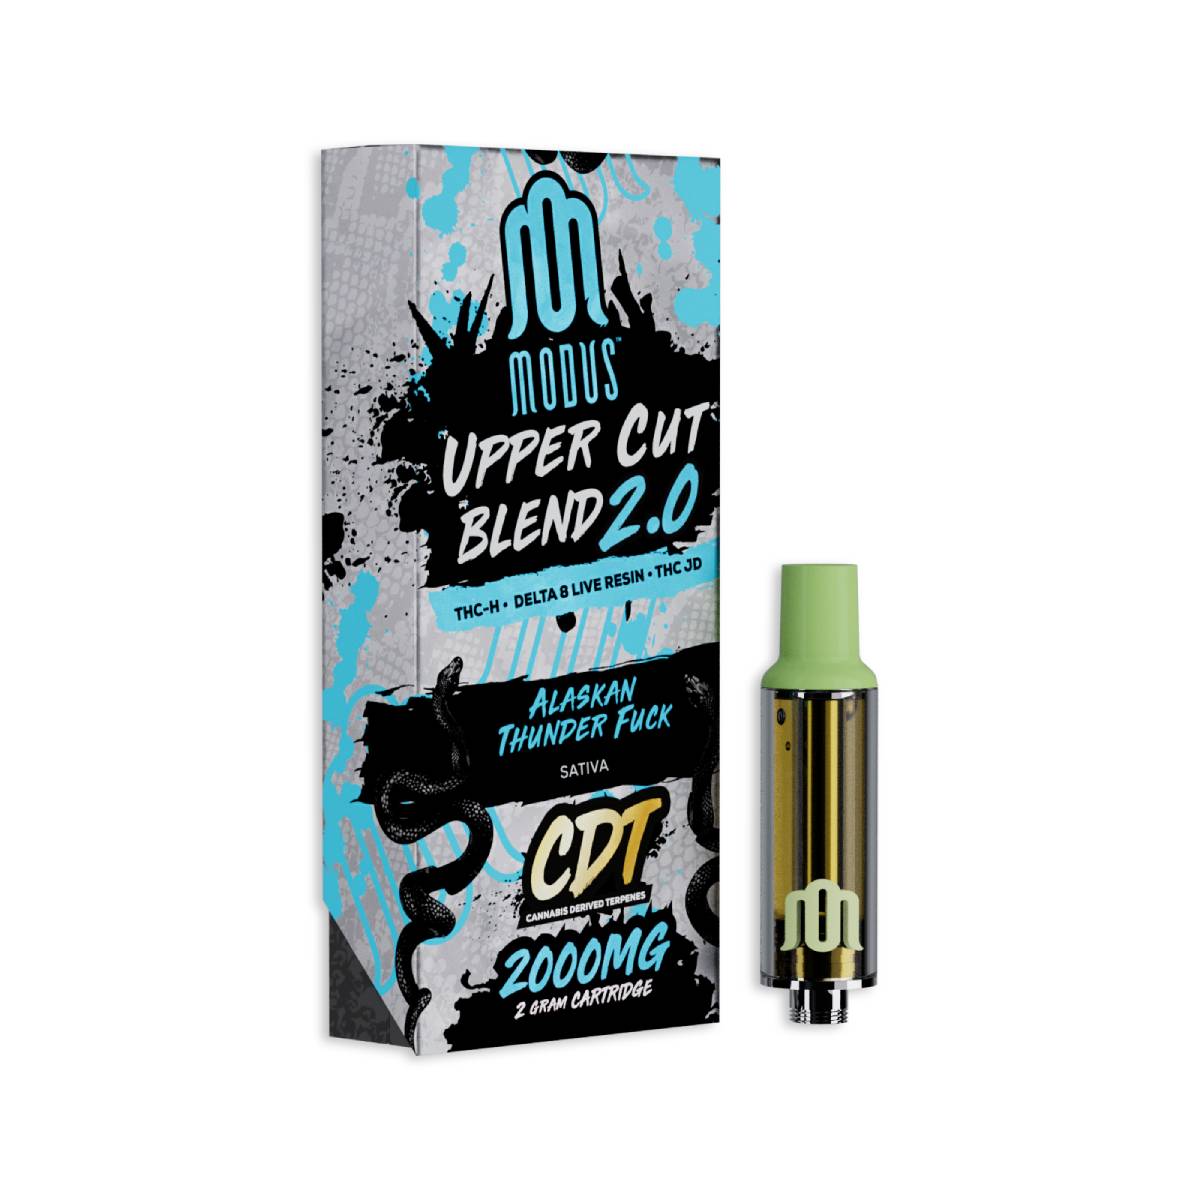 Modus Upper Cut Blend Cartridges 2.0g Best Price